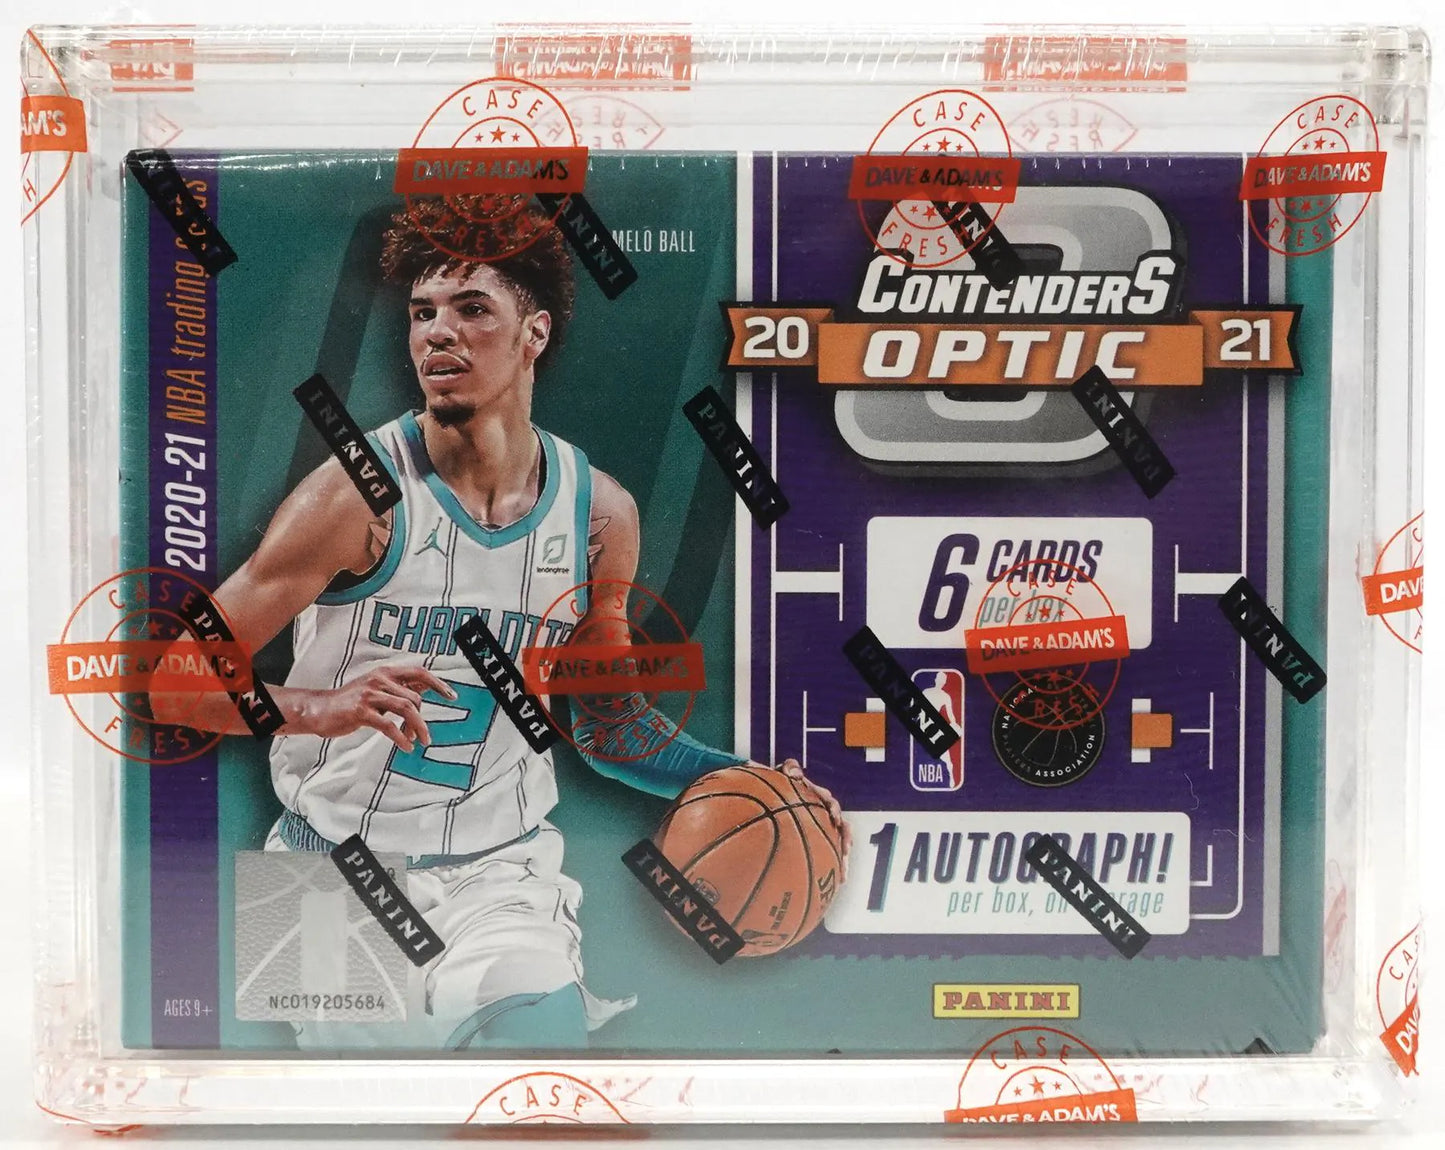 2020/21 Panini Contenders Optic Basketball Hobby Box (Case Fresh)